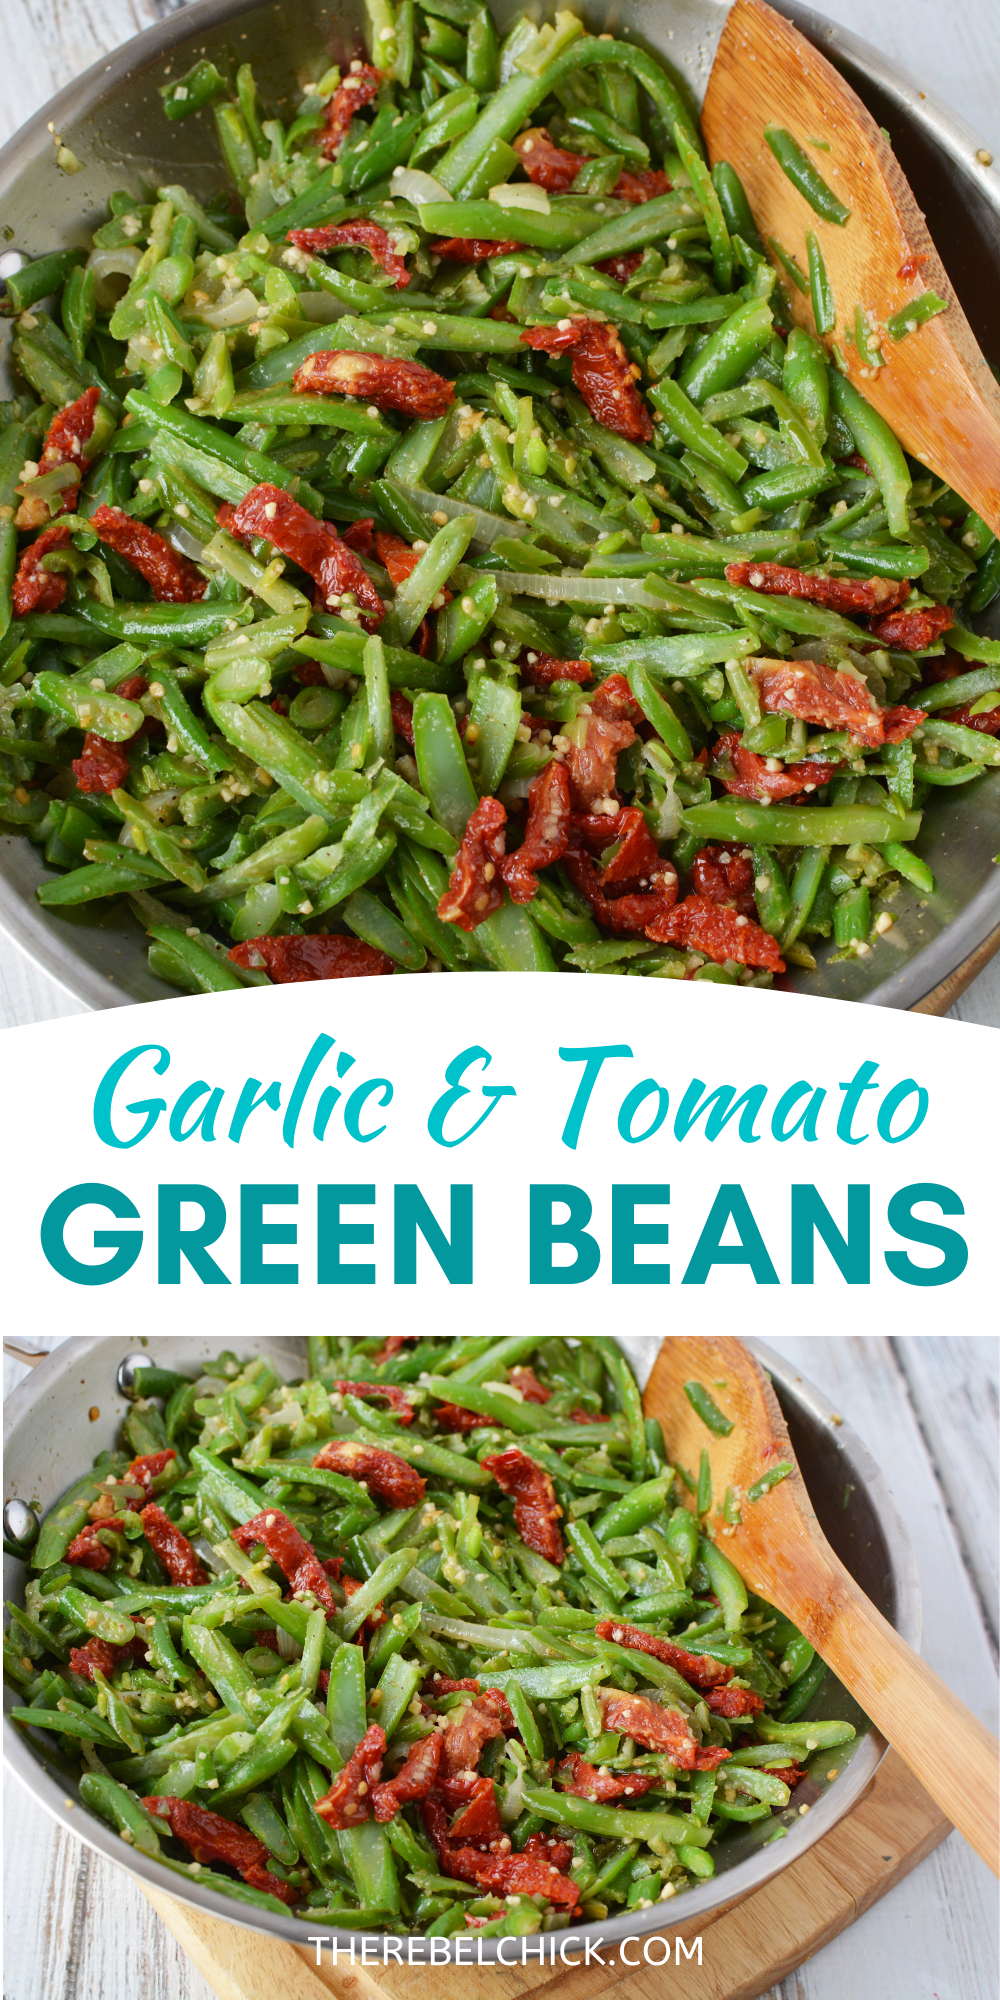 Garlic & Tomato Green Beans Recipe